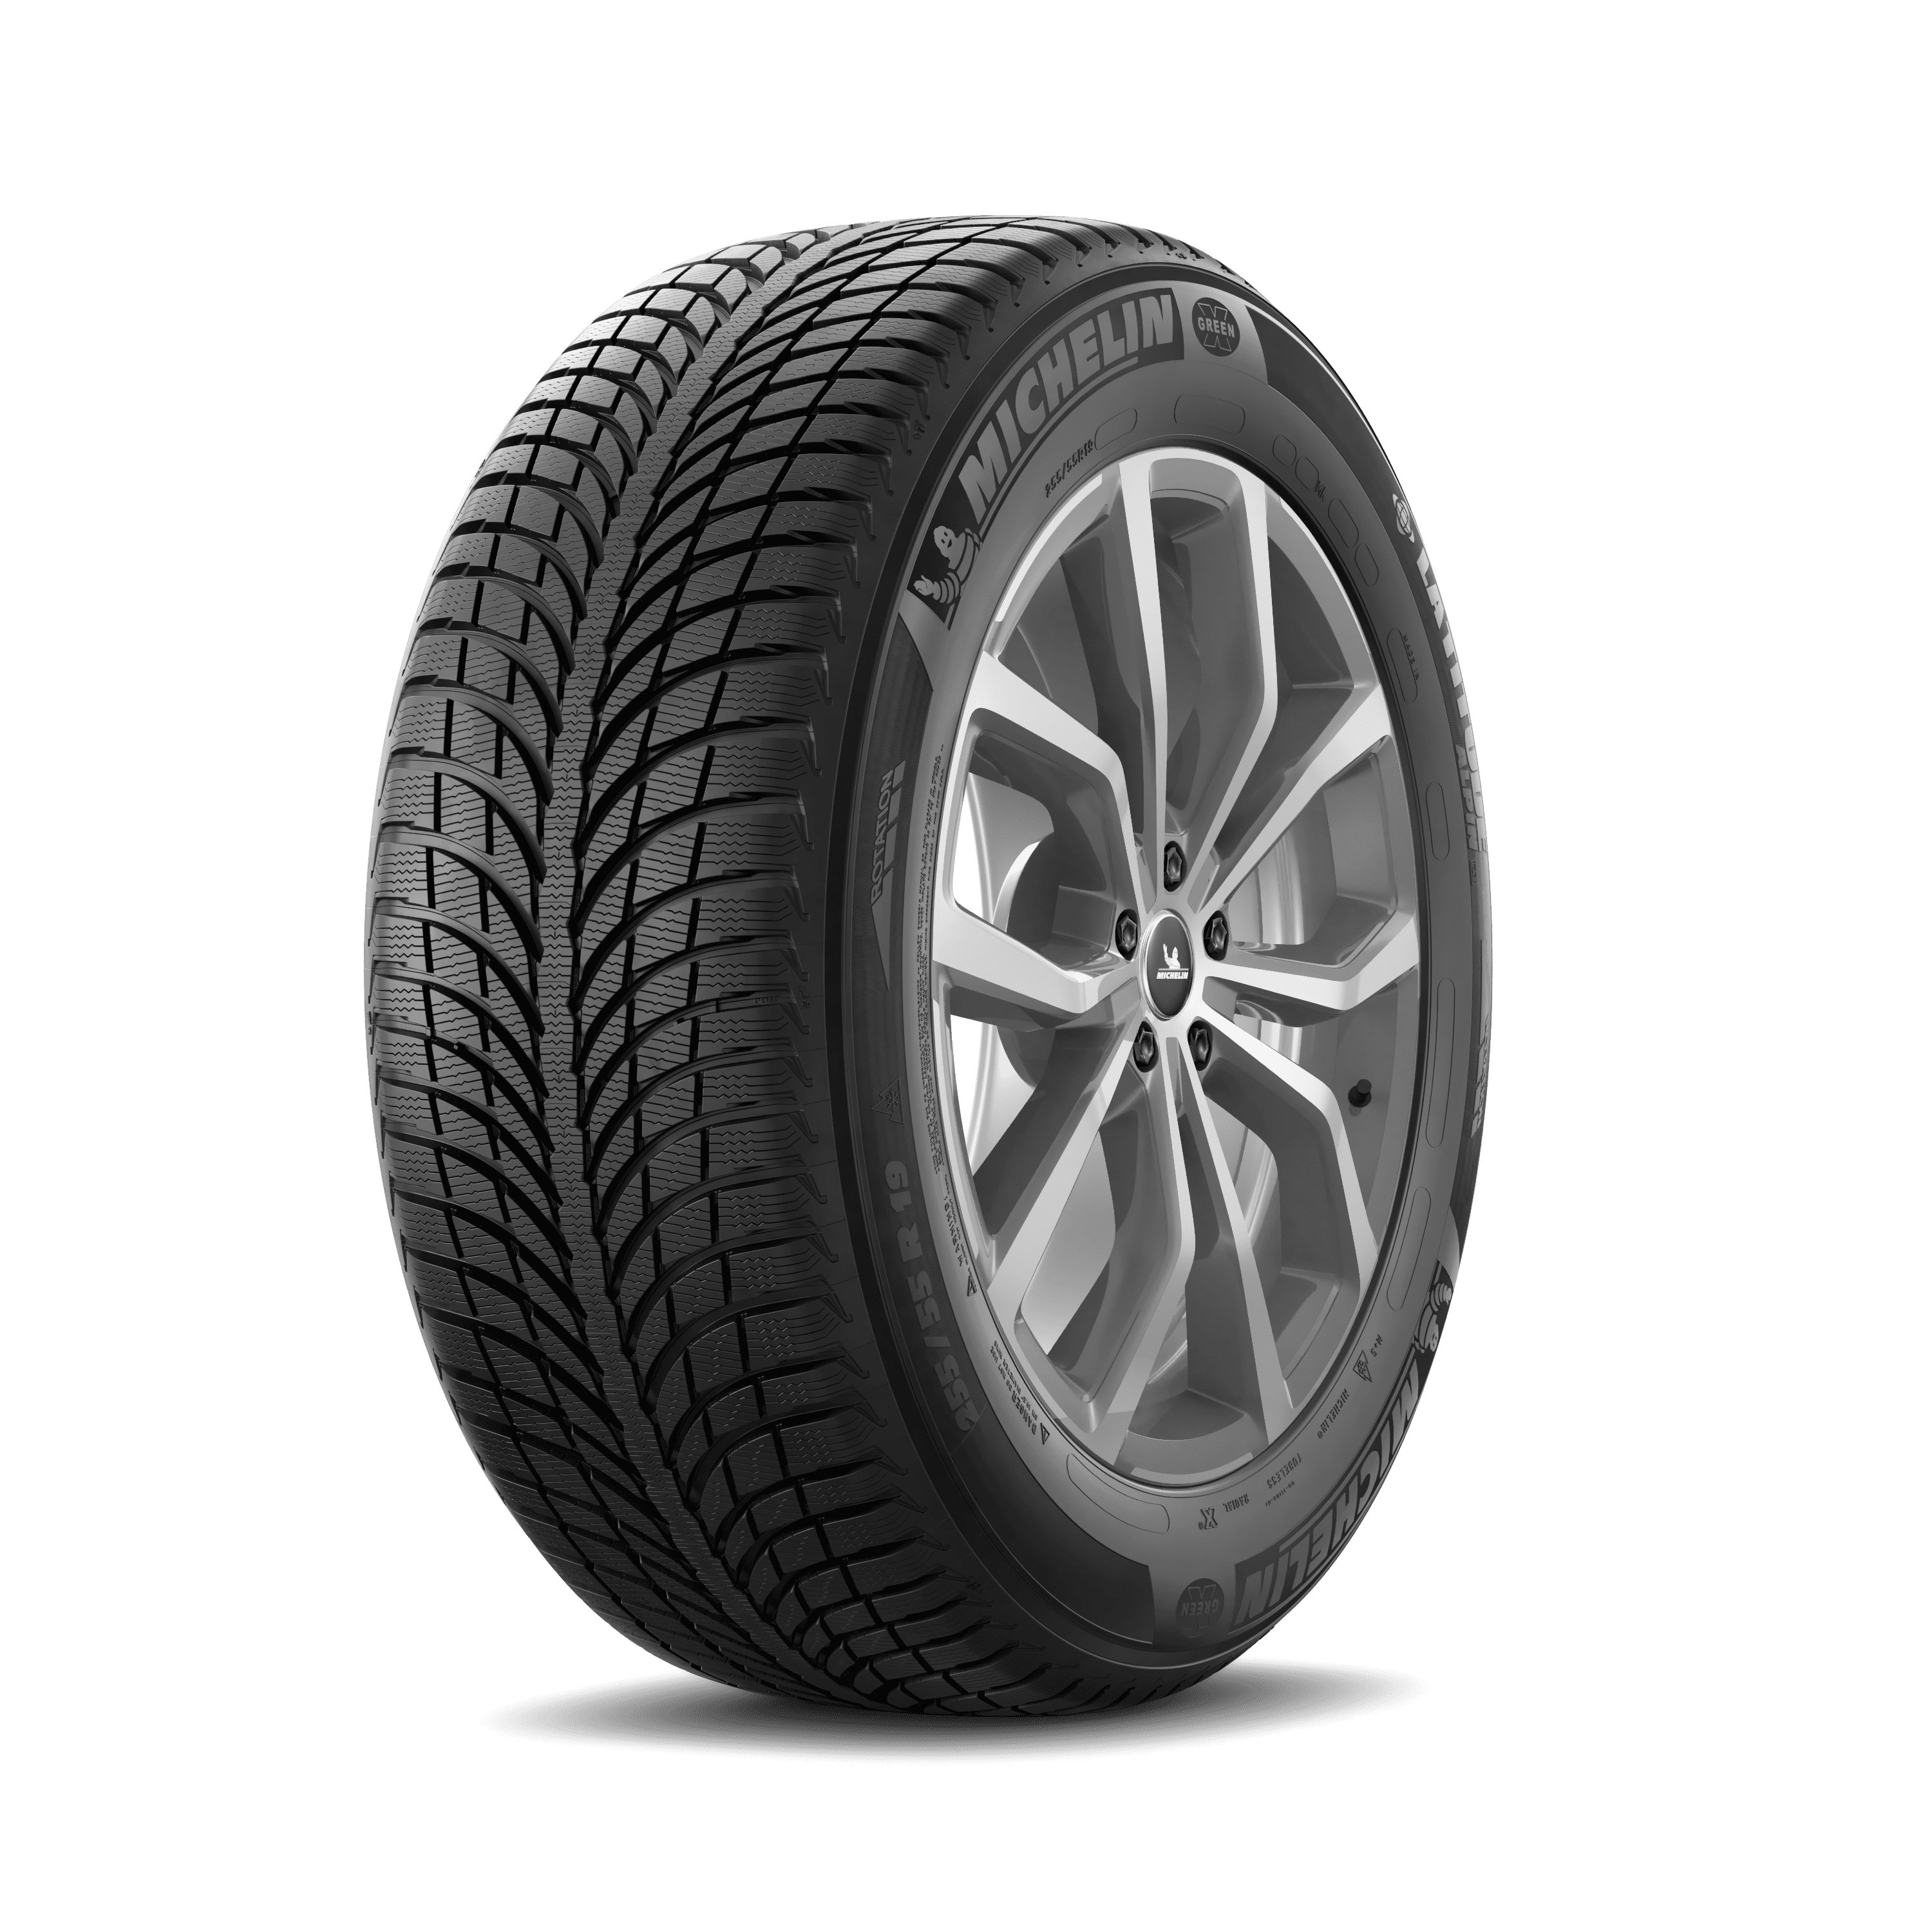 Michelin Latitude Alpin Performance High 105H Tire 255/55R18